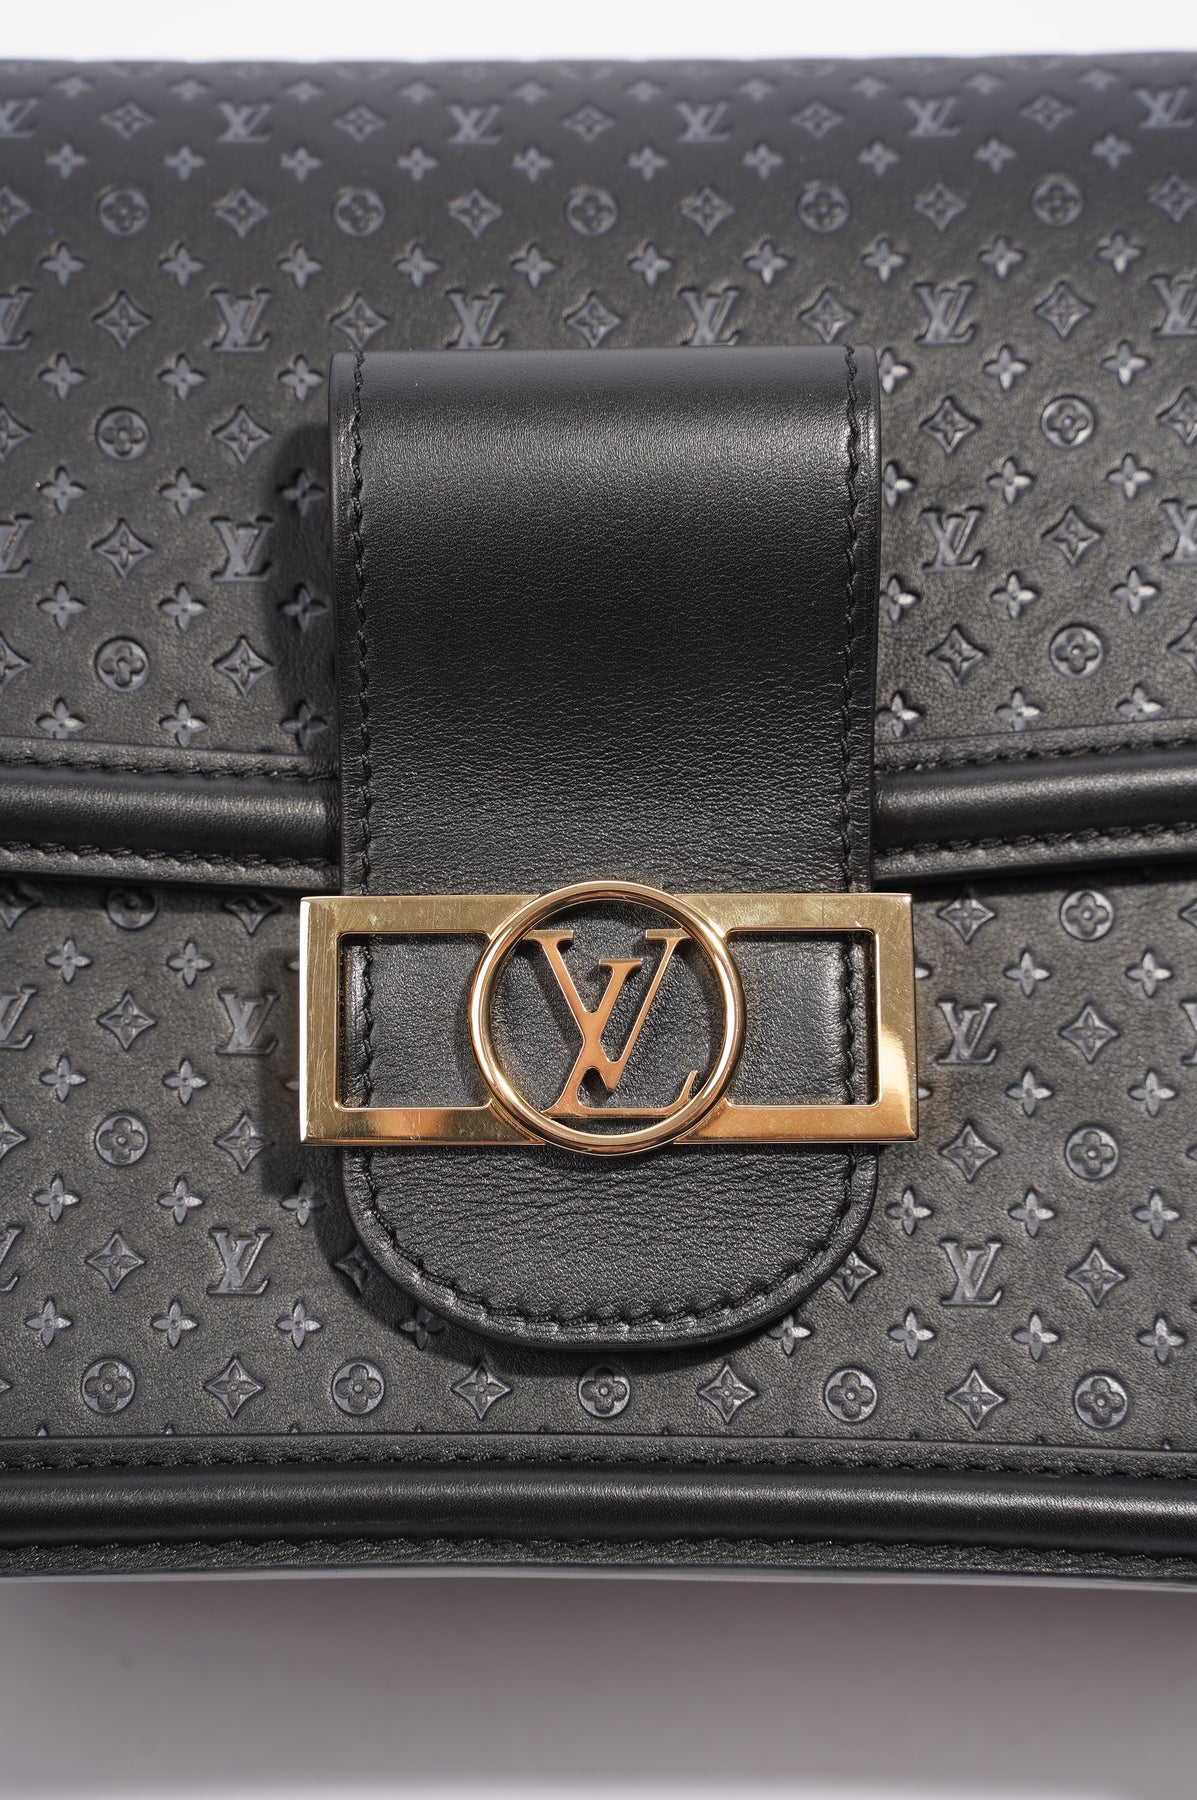 Louis Vuitton Dauphine Shoulder Bag in Black, Blue and White Monogram